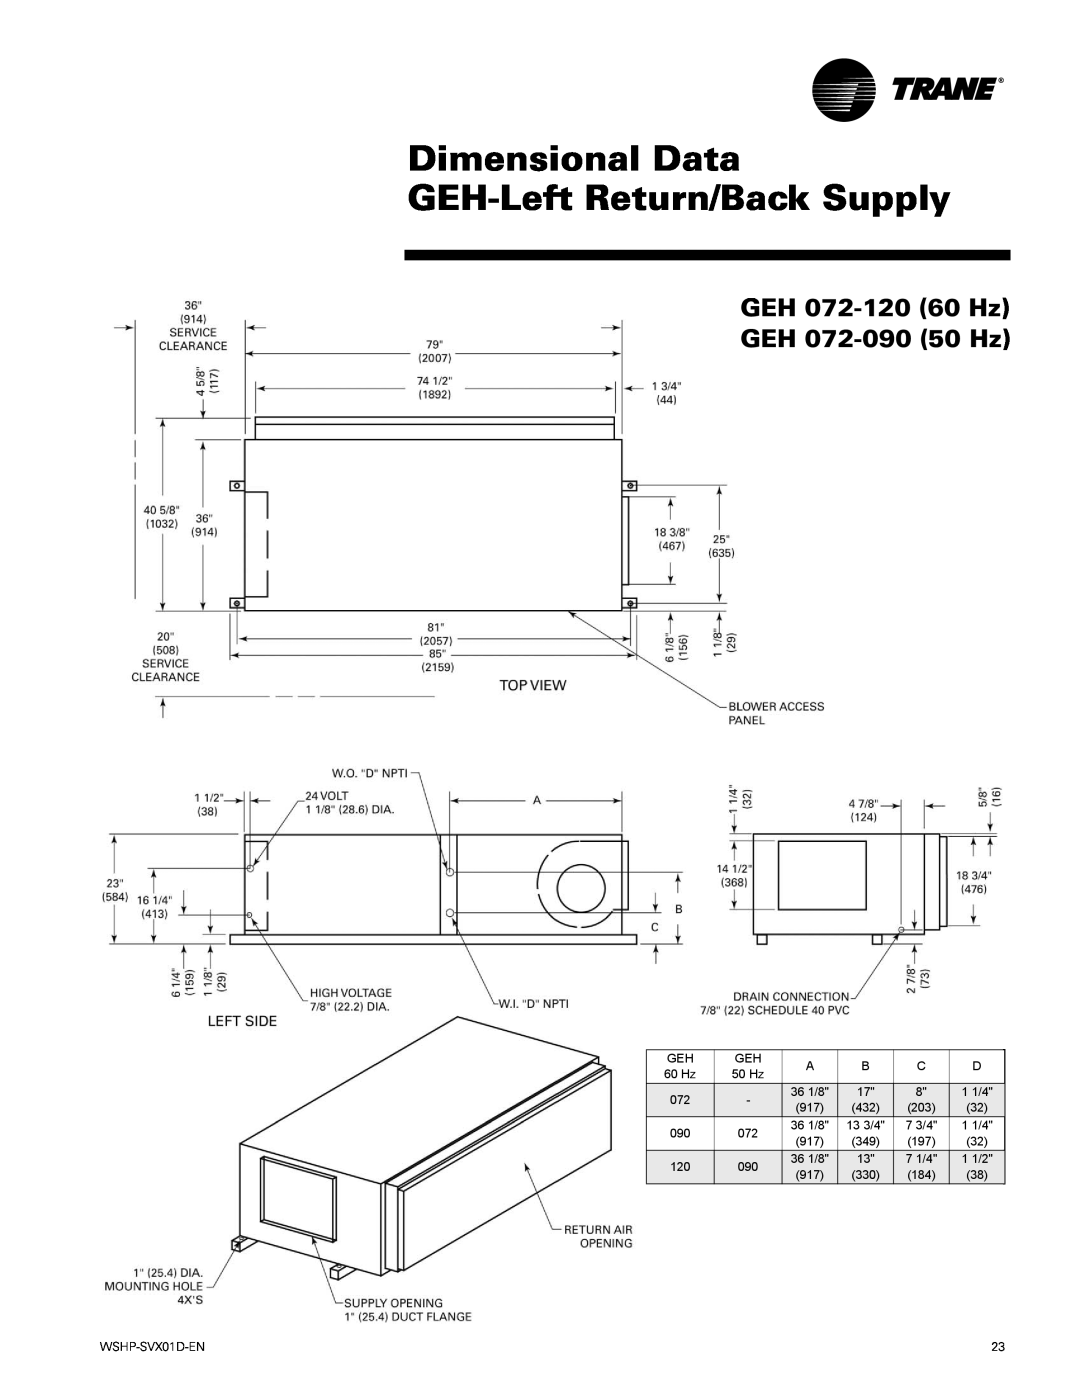 Trane GEV manual Dimensional Data GEH-LeftReturn/Back Supply, GEH 072-12060 Hz GEH 072-09050 Hz 